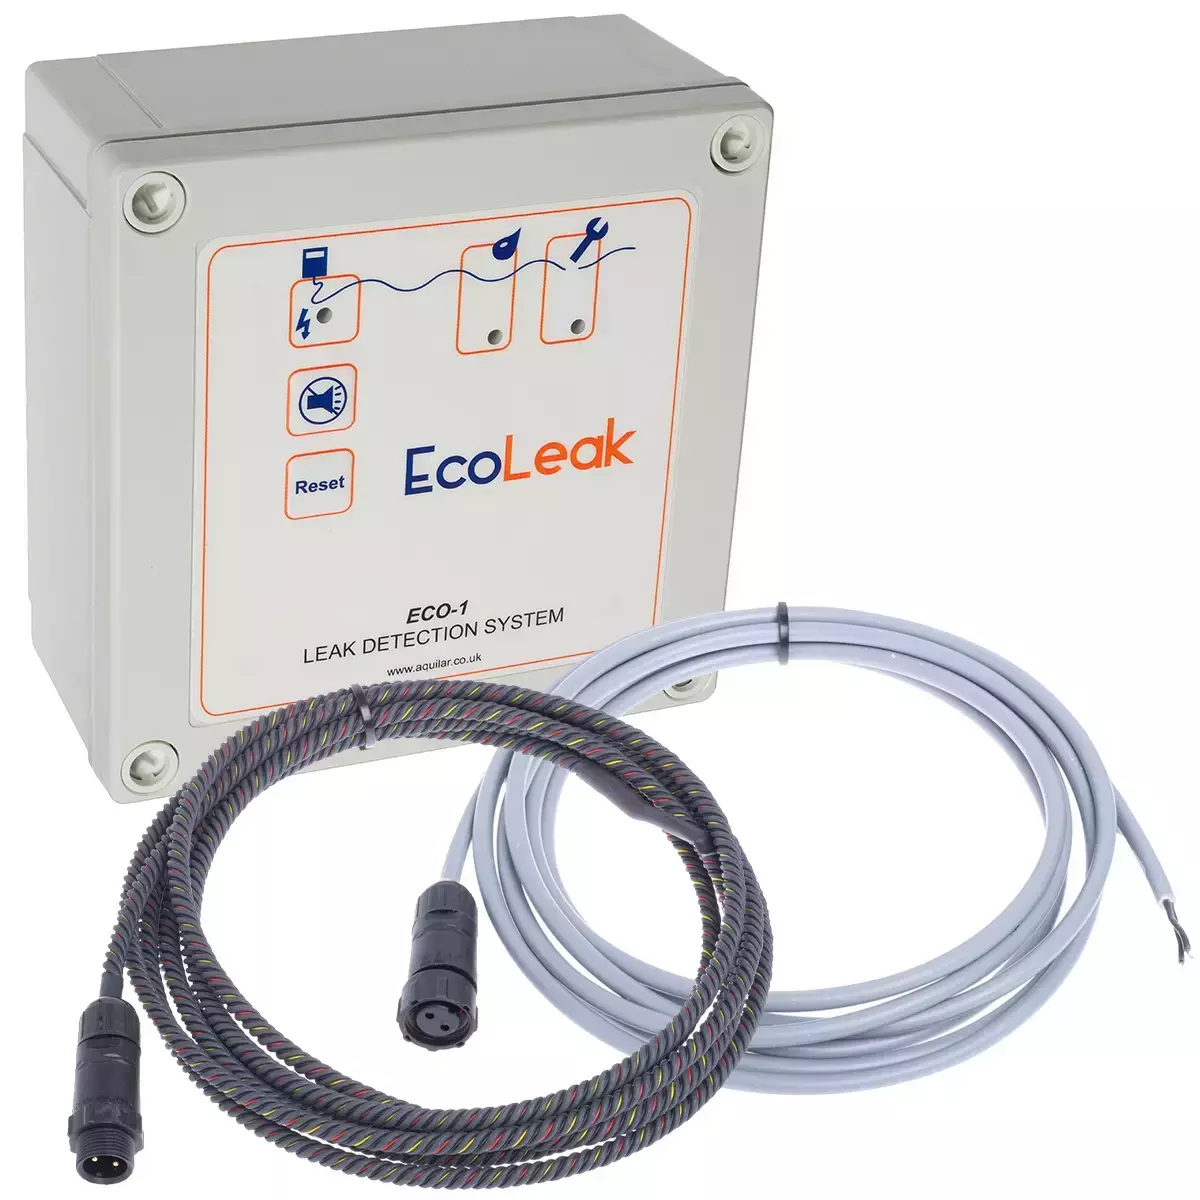 EcoLeak ECO-SC-1 alarm panel with relay + 1 m linear flood sensor